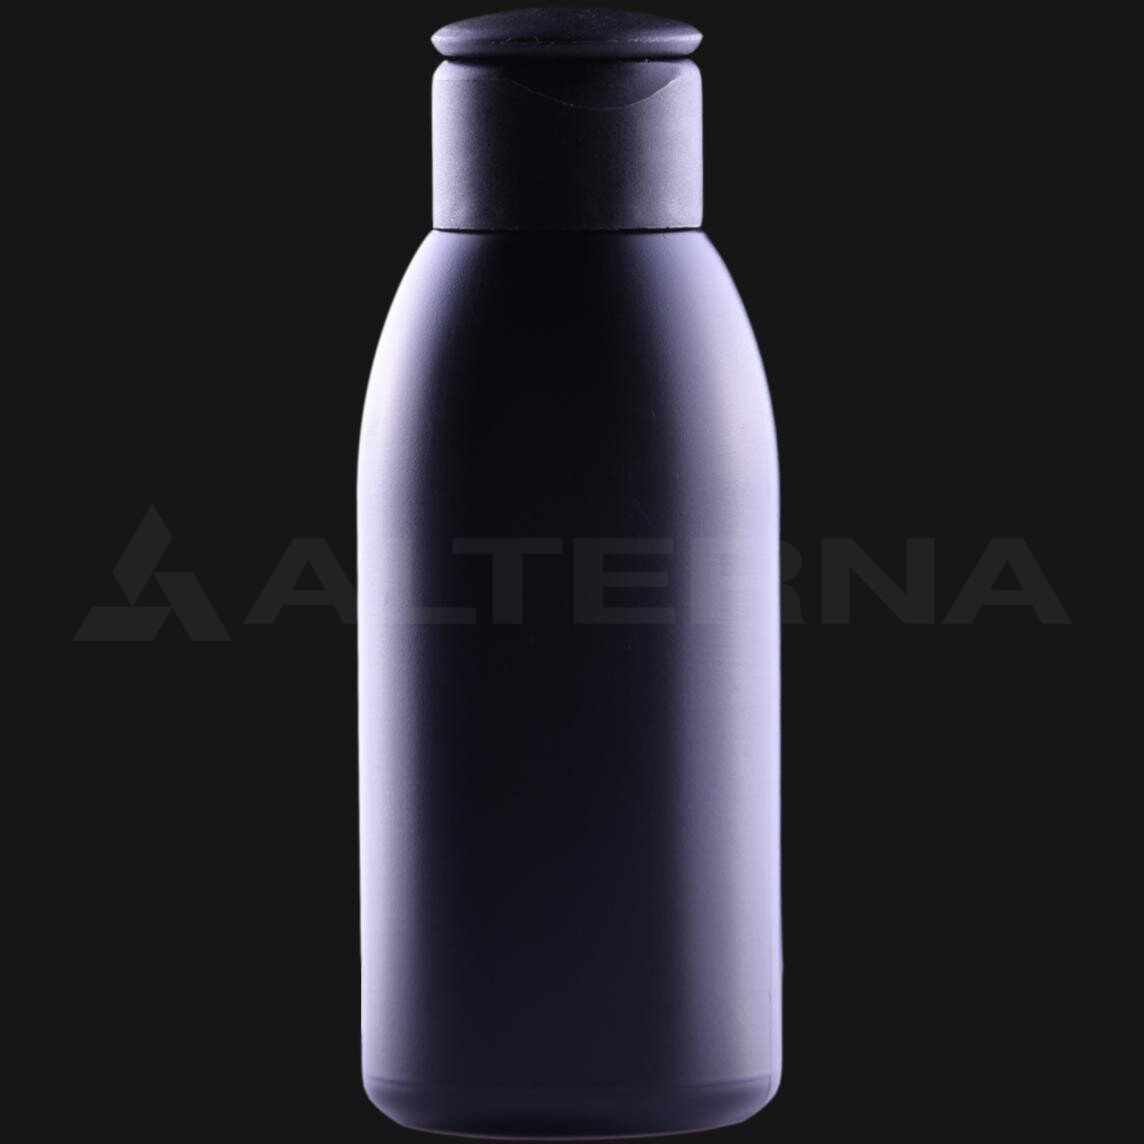 100 ml HDPE Bottle with 24 mm Flip Top Cap